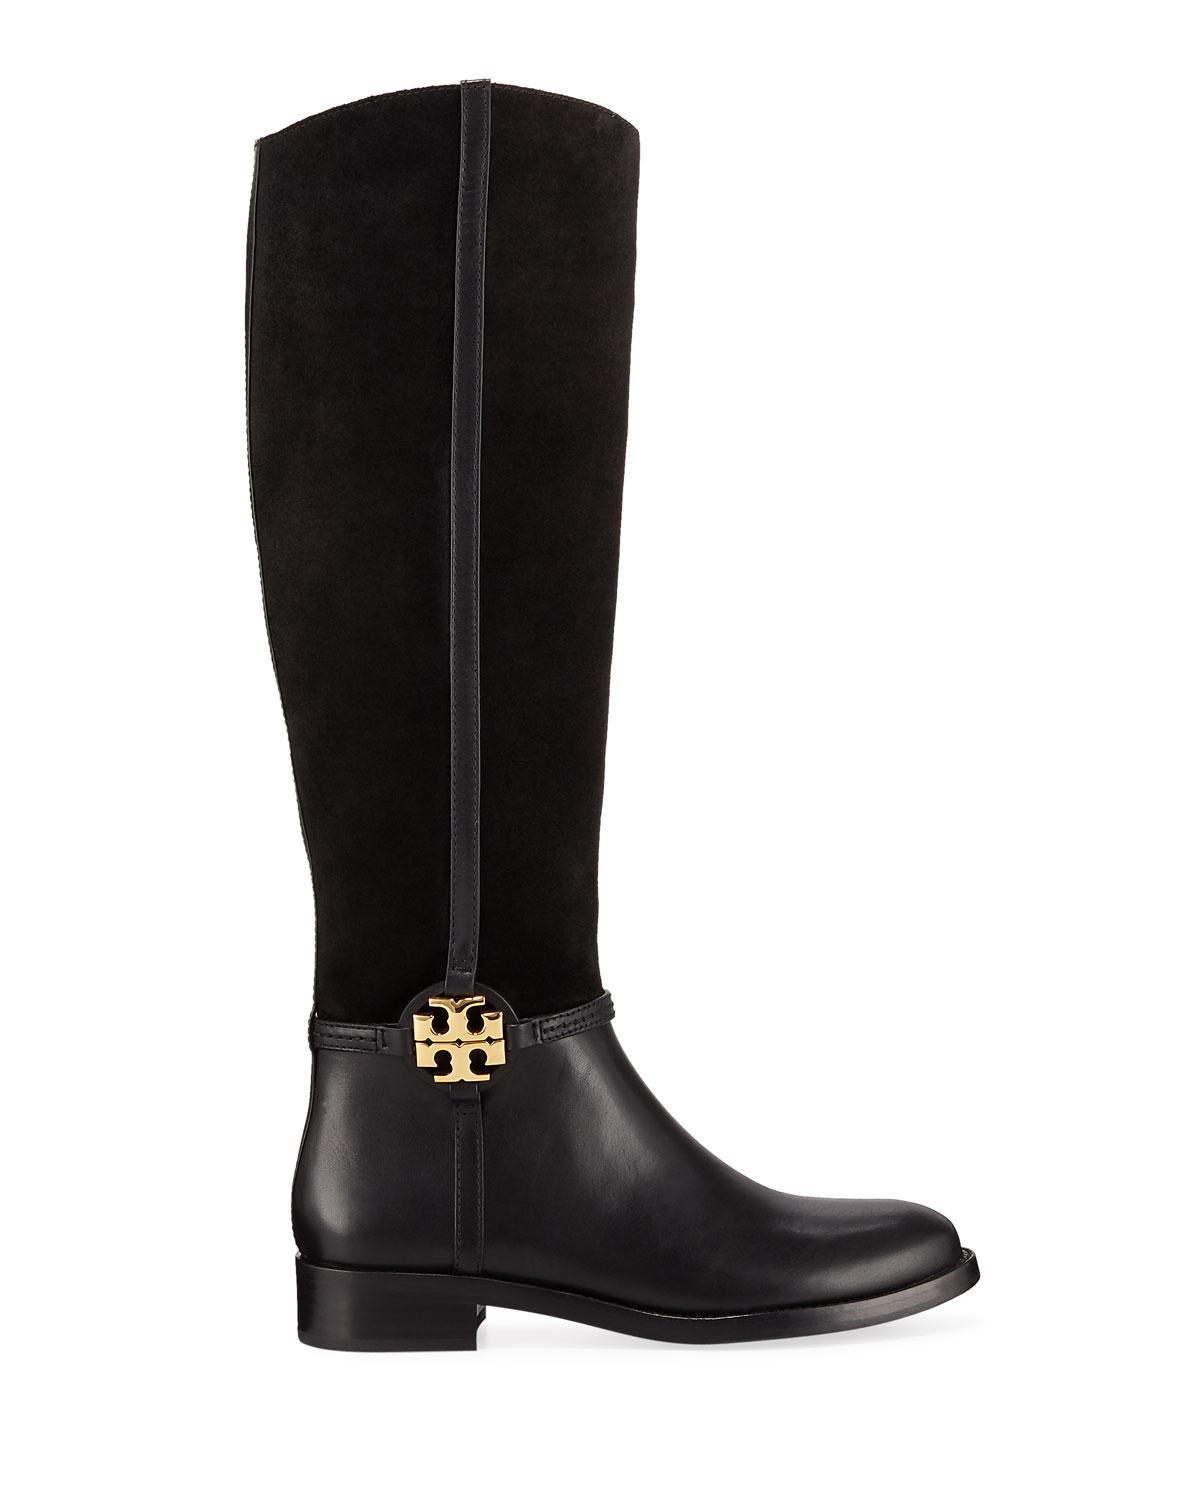 Tory Burch Women's Miller Tall Boots in Black | Lyst